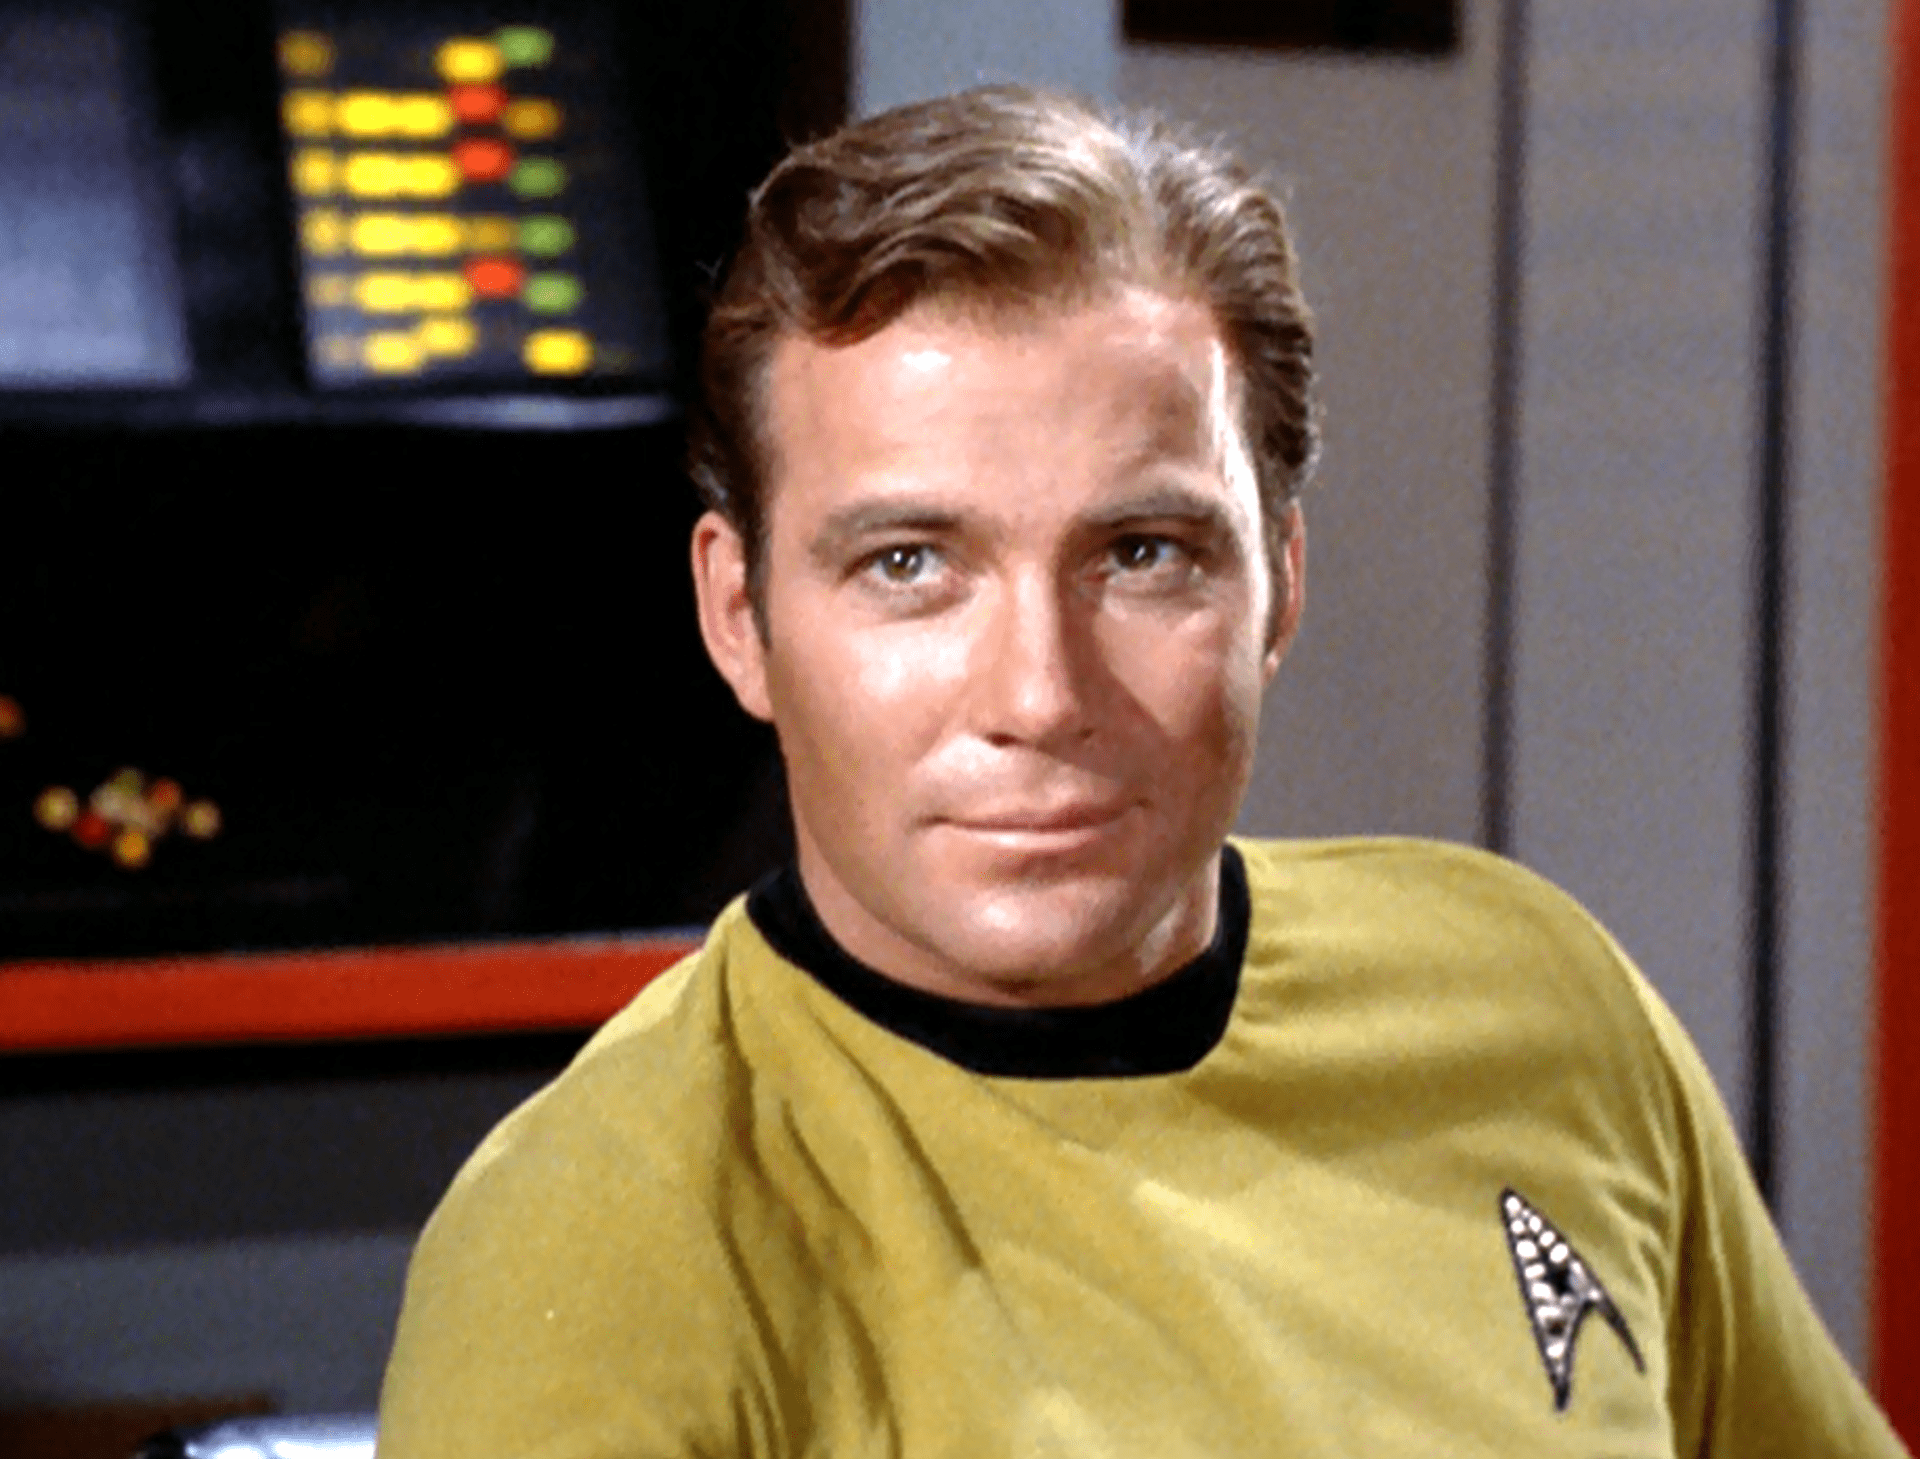 Williams Shatner jako James T. Kirk ve Star Treku